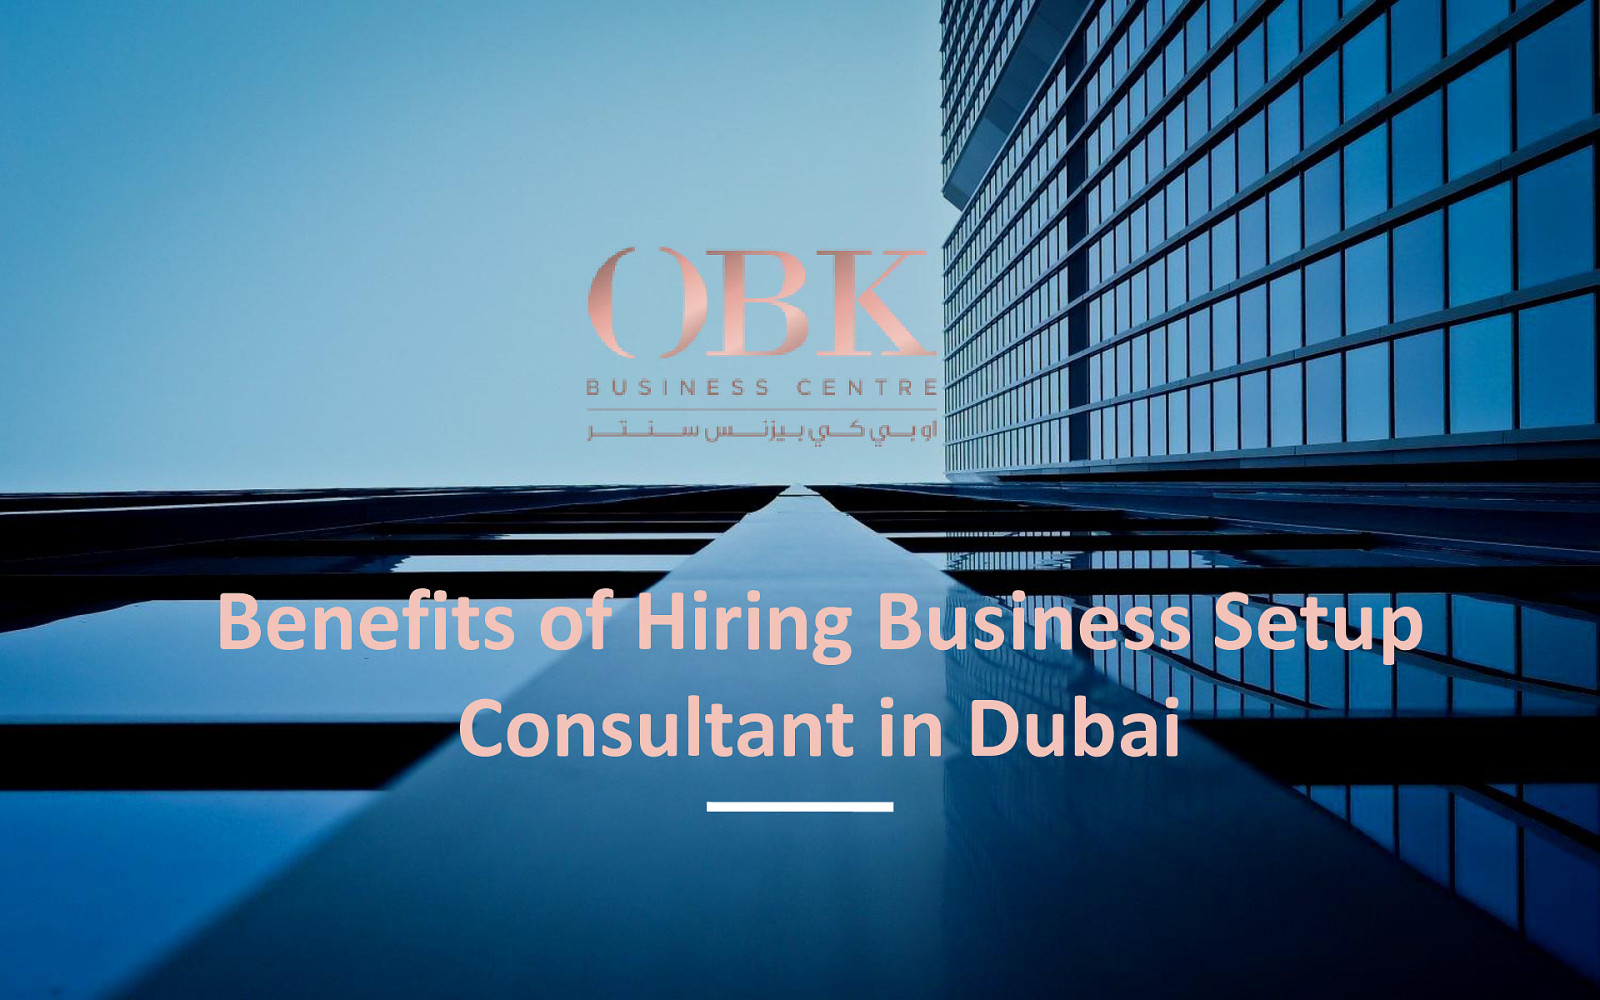  Benefits of Hiring Business Setup Consultant in Dubai